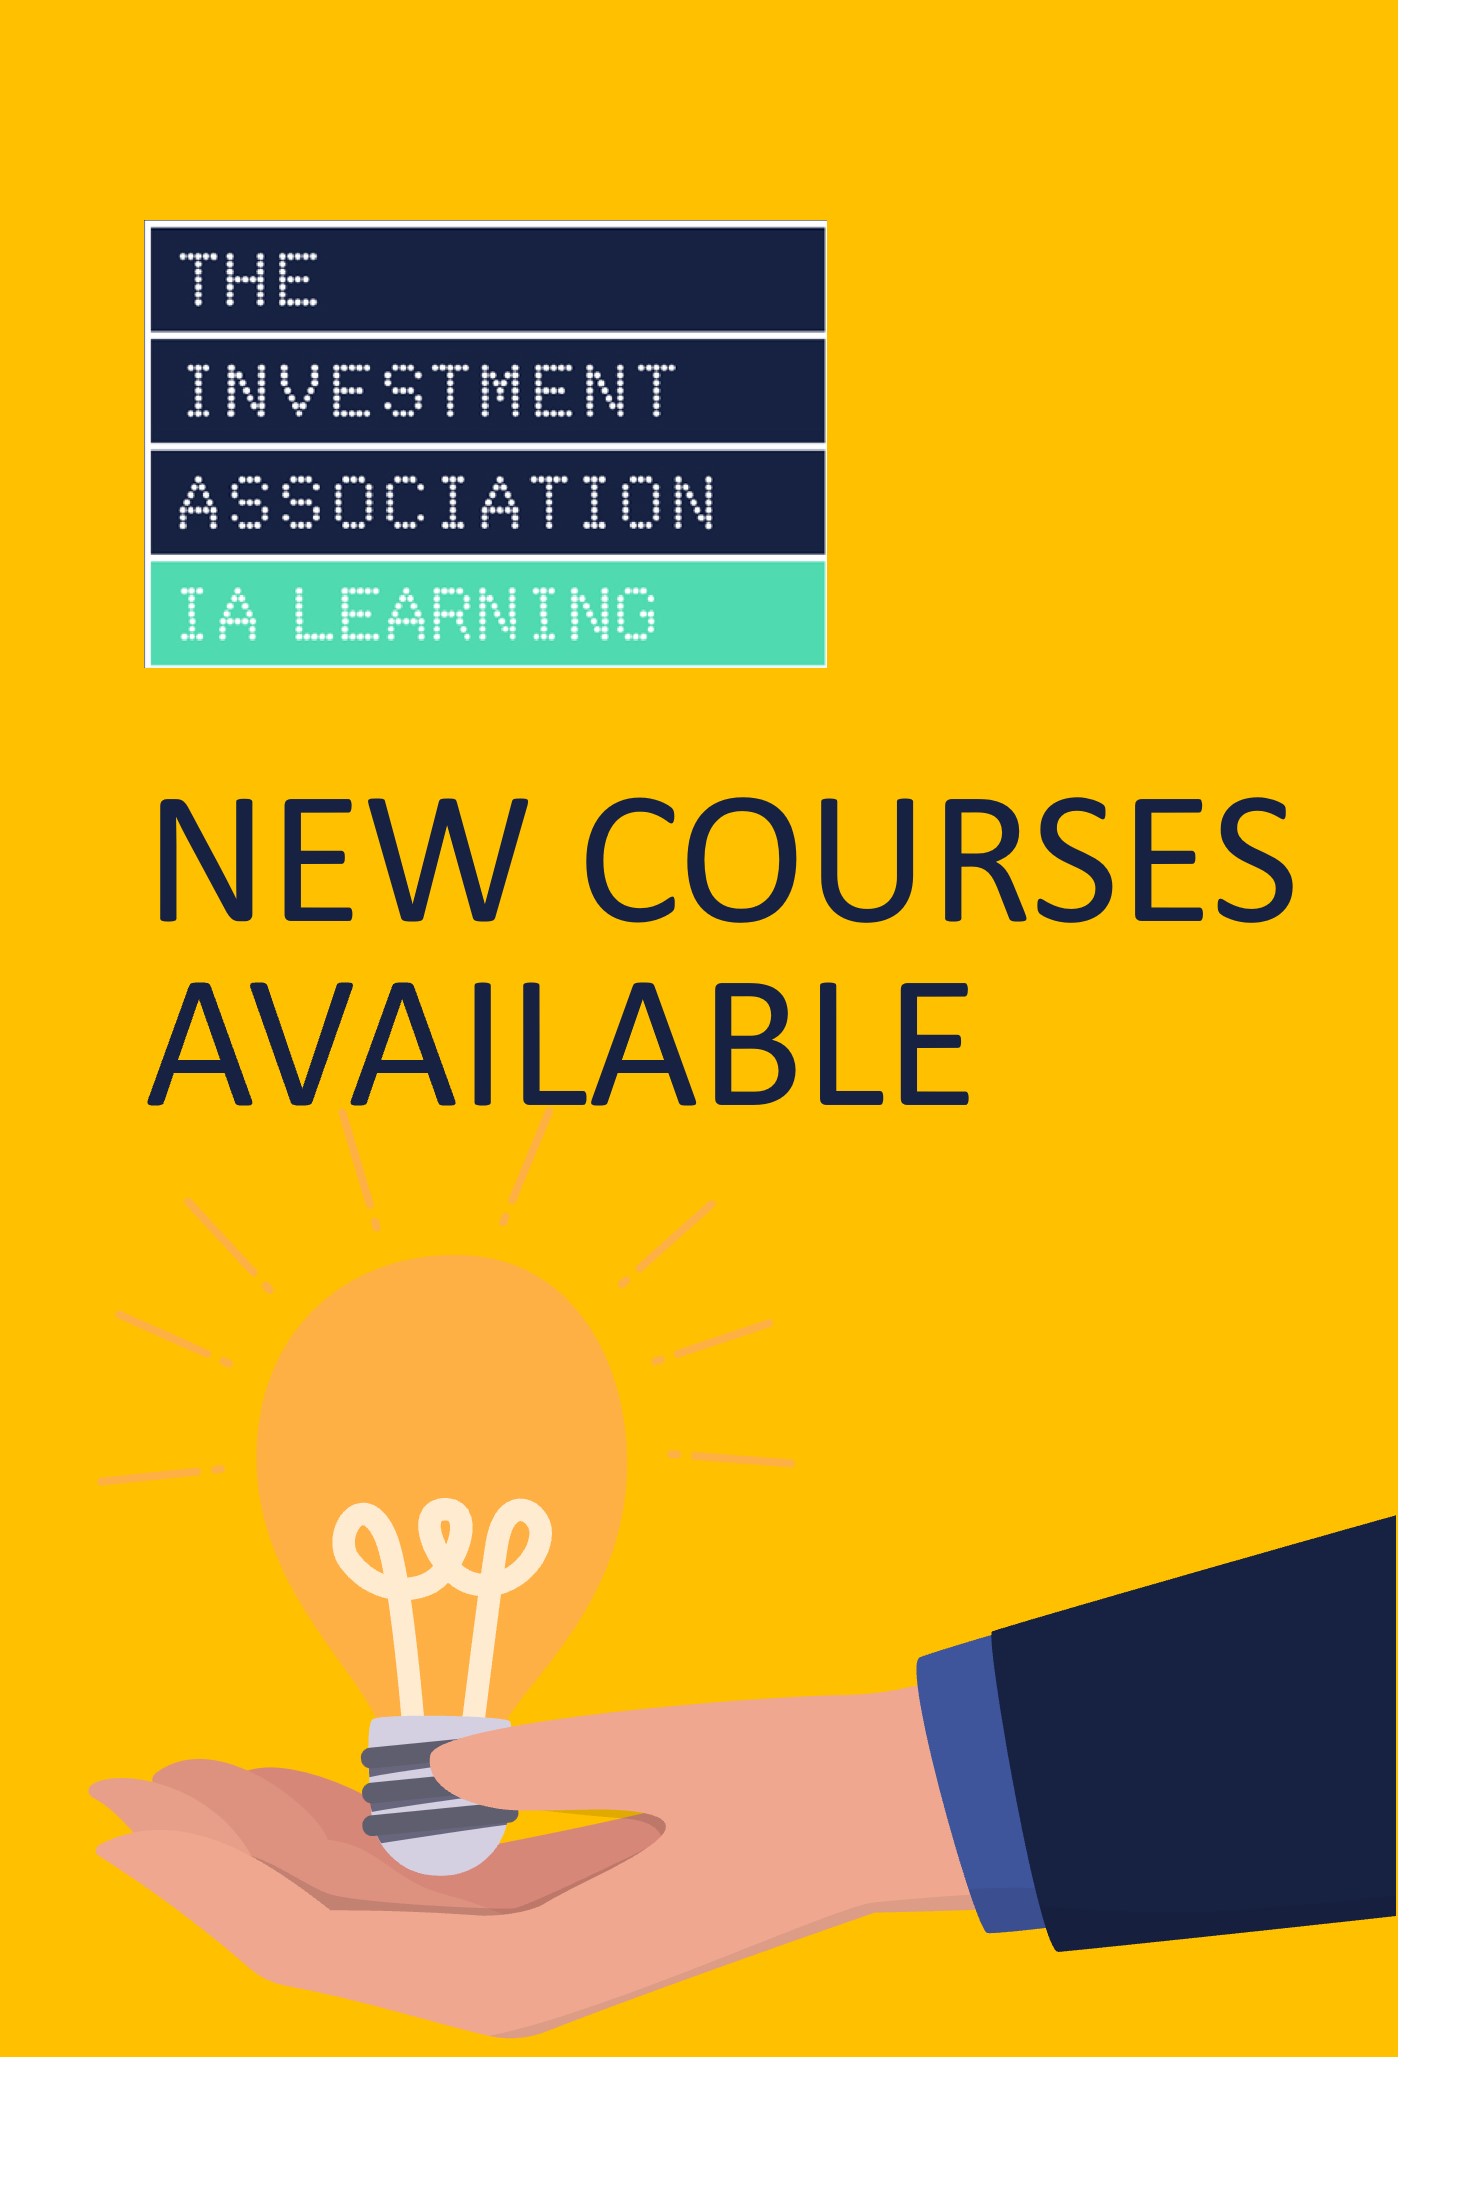 IA Learning new courses